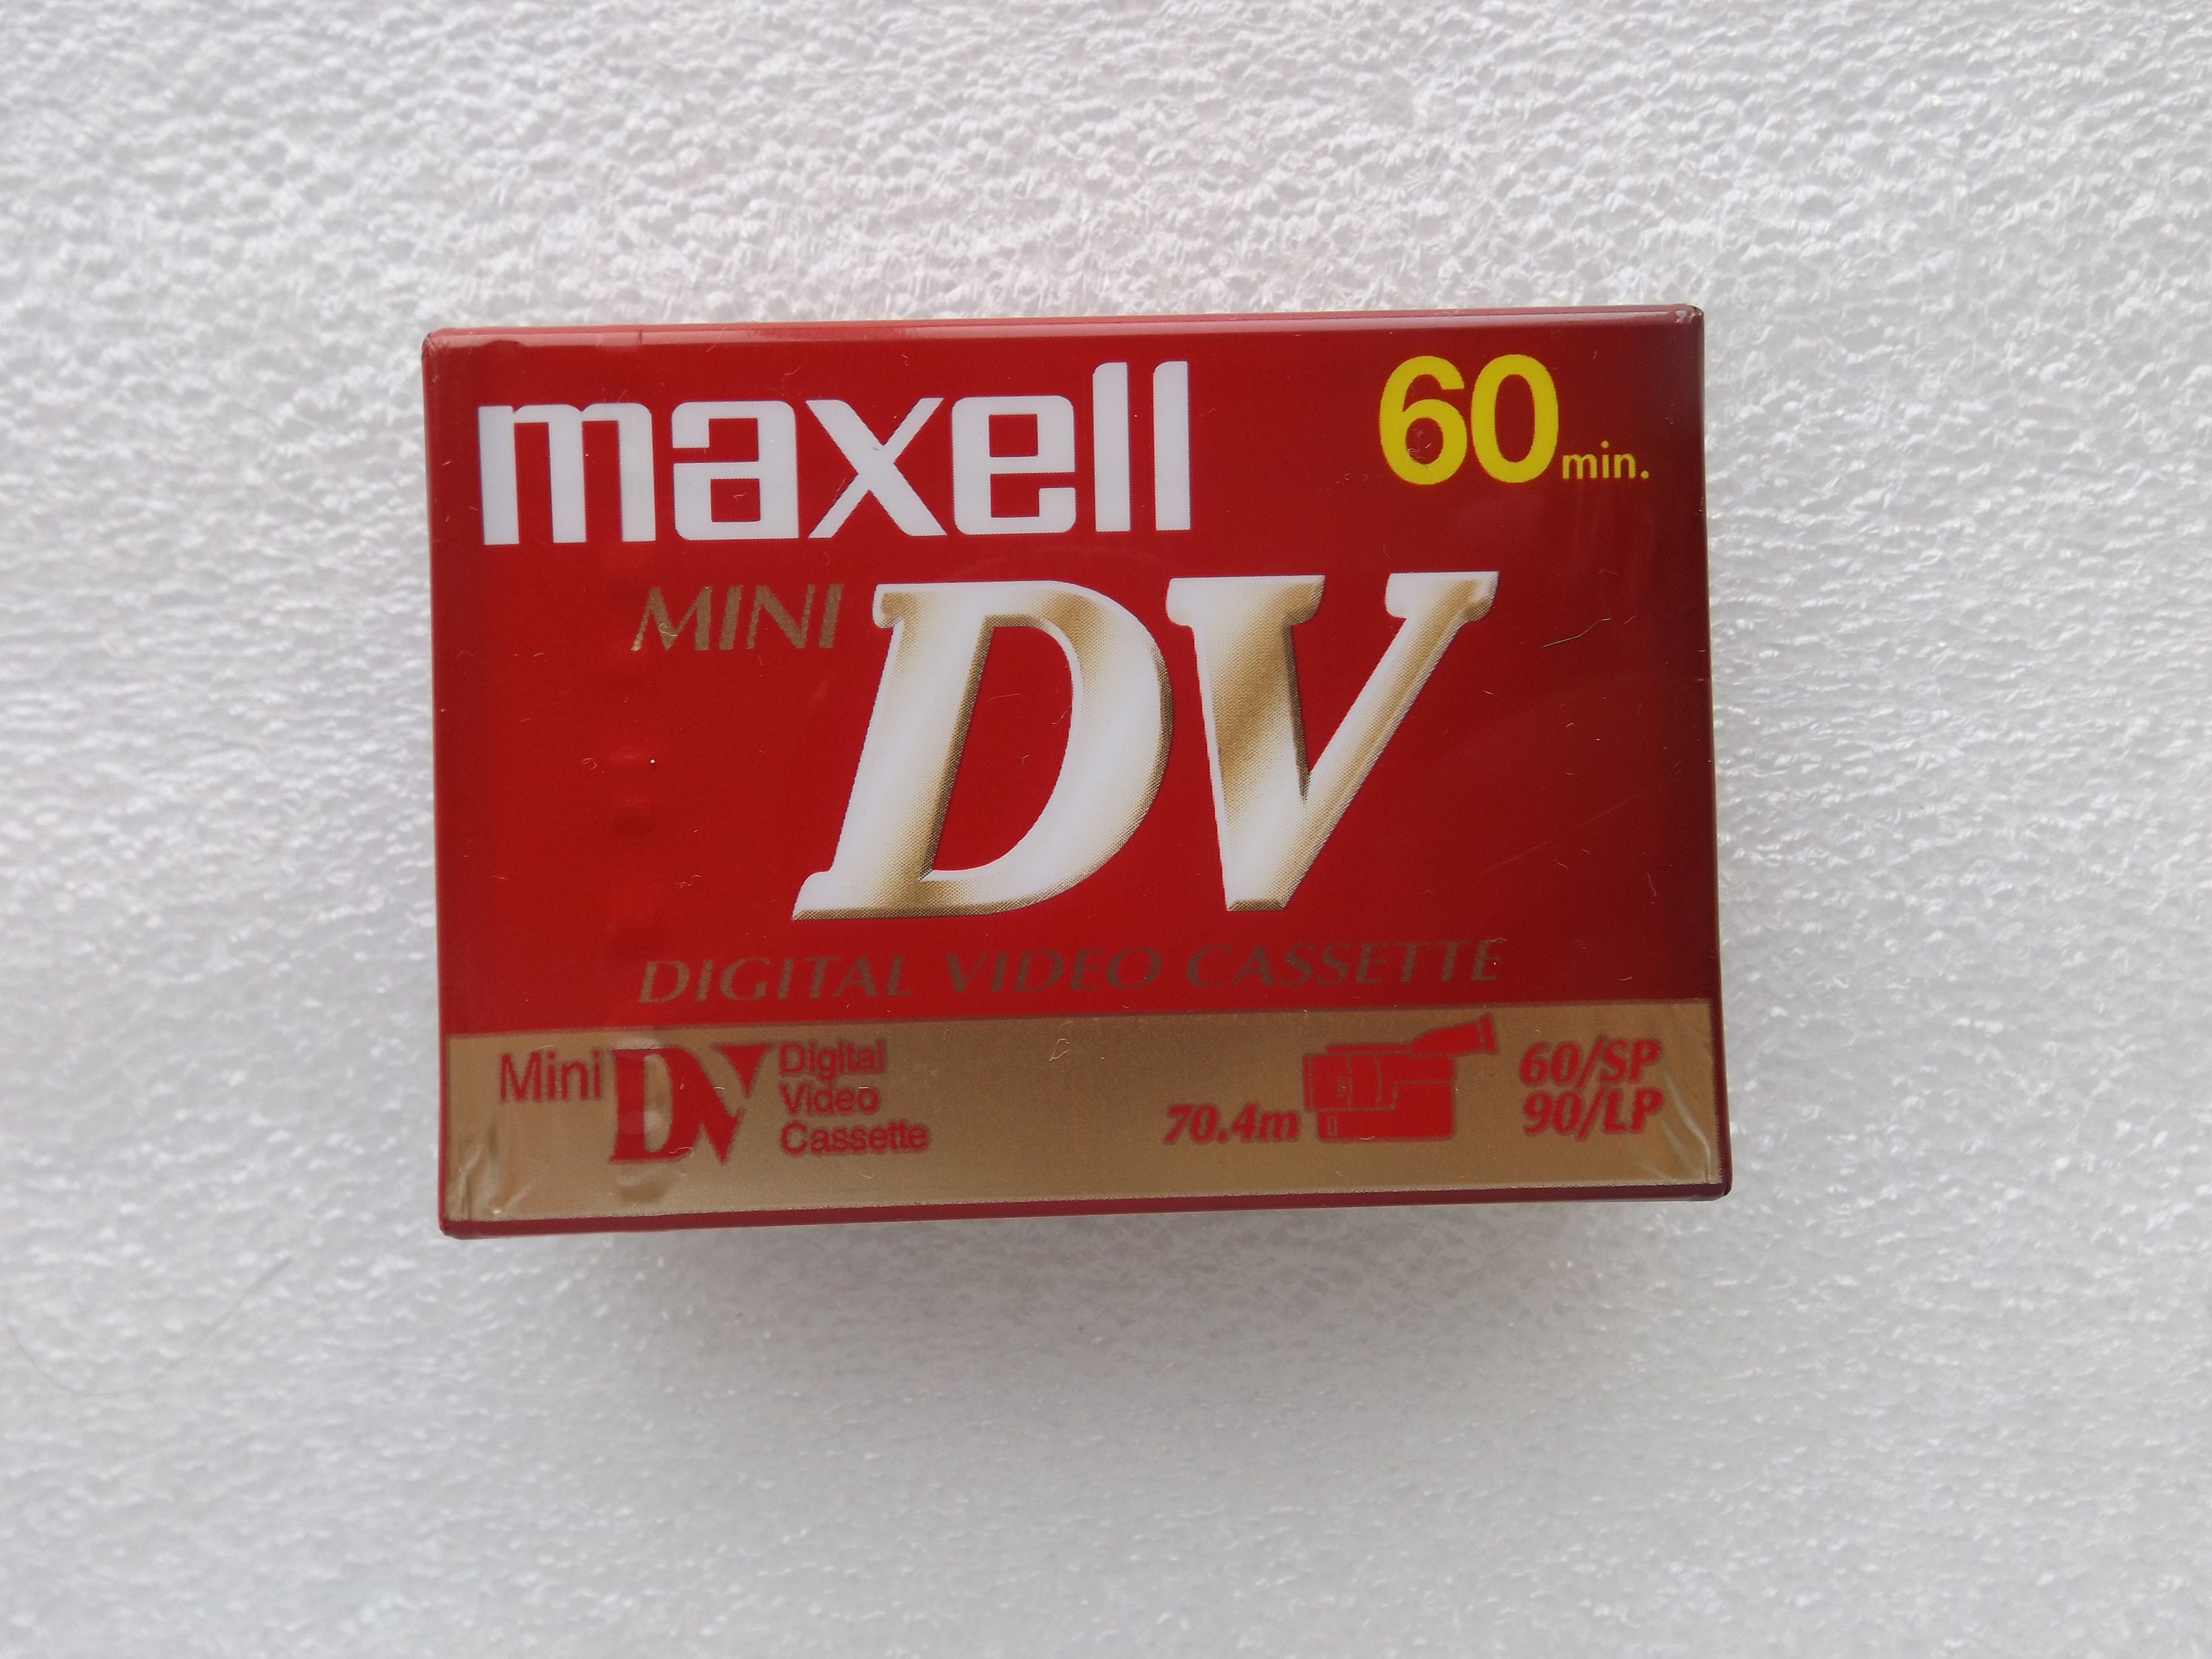 Maxell Mini DV Digital Video Cassette, Mini DV Cassette Tape Maxell DVM60SE  for Camcorder, Made in Japan NEW, Sealed, Free Shipping -  Canada